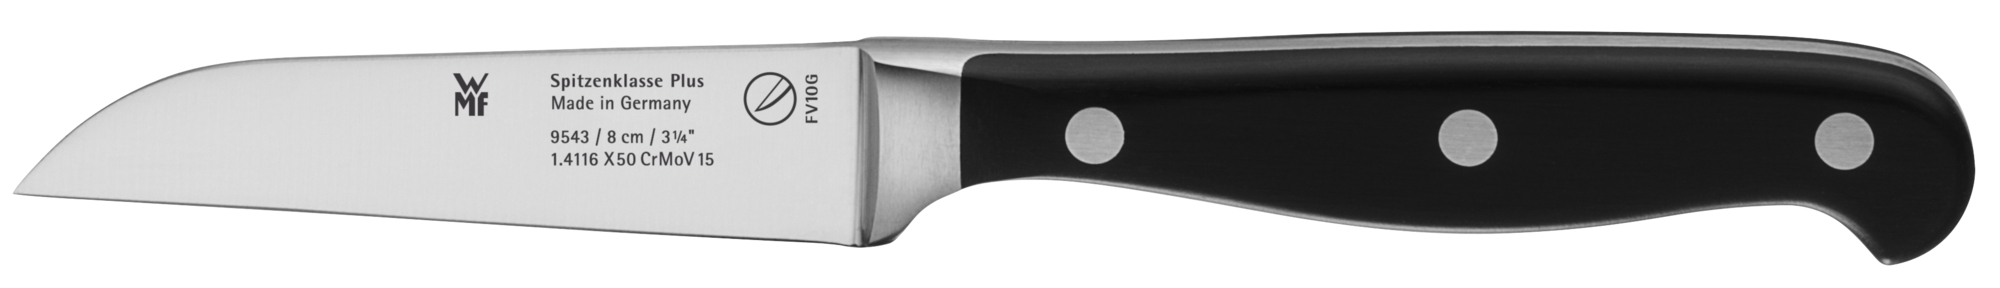 Овощной нож Spitzenklasse Plus 8 см нож для чистки овощей webber